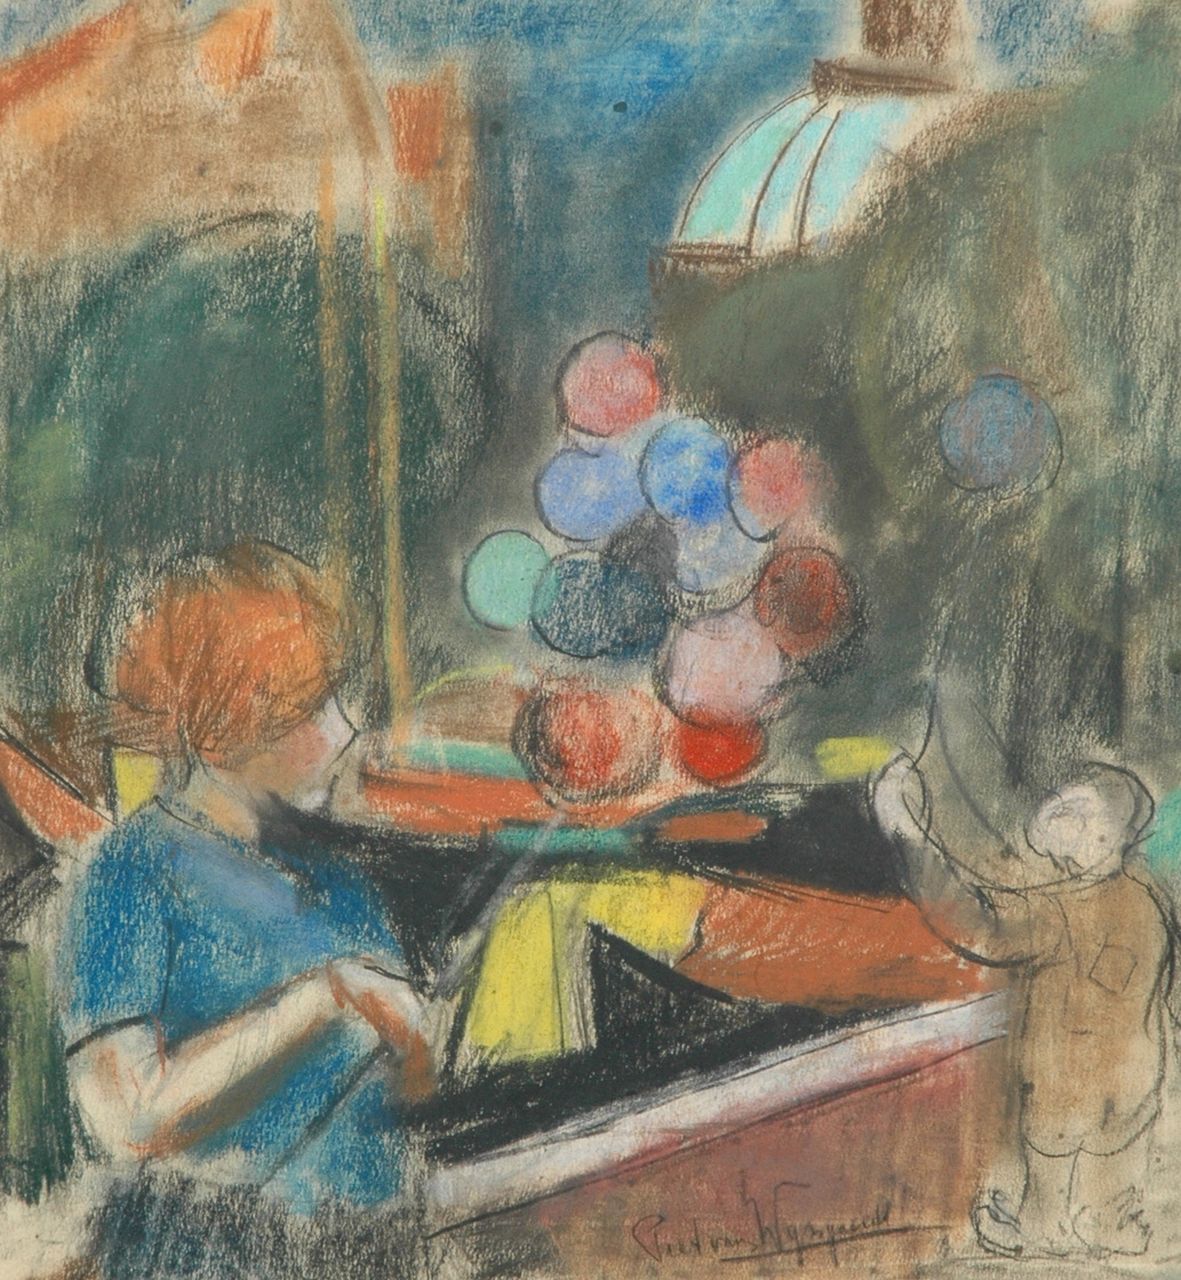 Wijngaerdt P.T. van | Petrus Theodorus 'Piet' van Wijngaerdt, A child and a balloon saleswoman, Pastell auf Papier 36,8 x 34,7 cm, signed l.r.